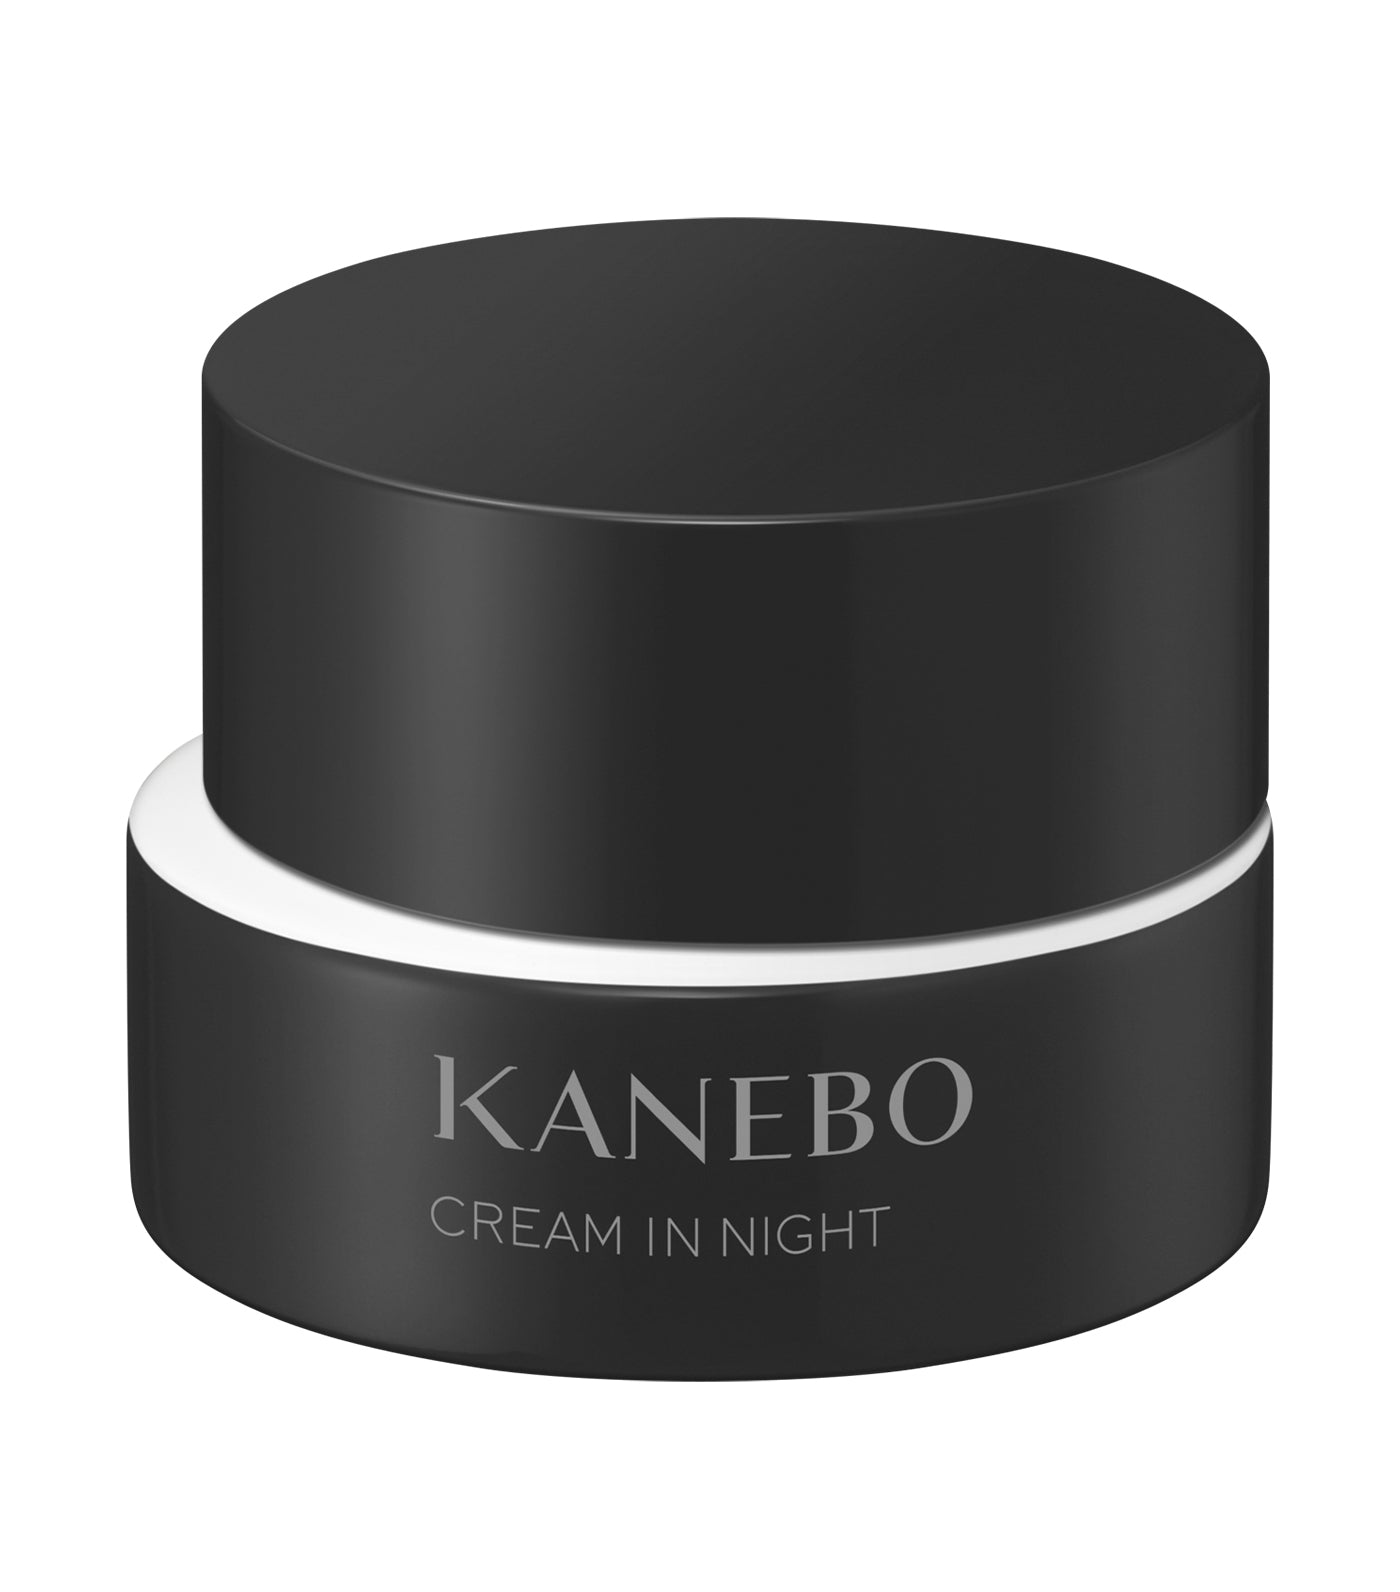 Kanebo Cream in Night